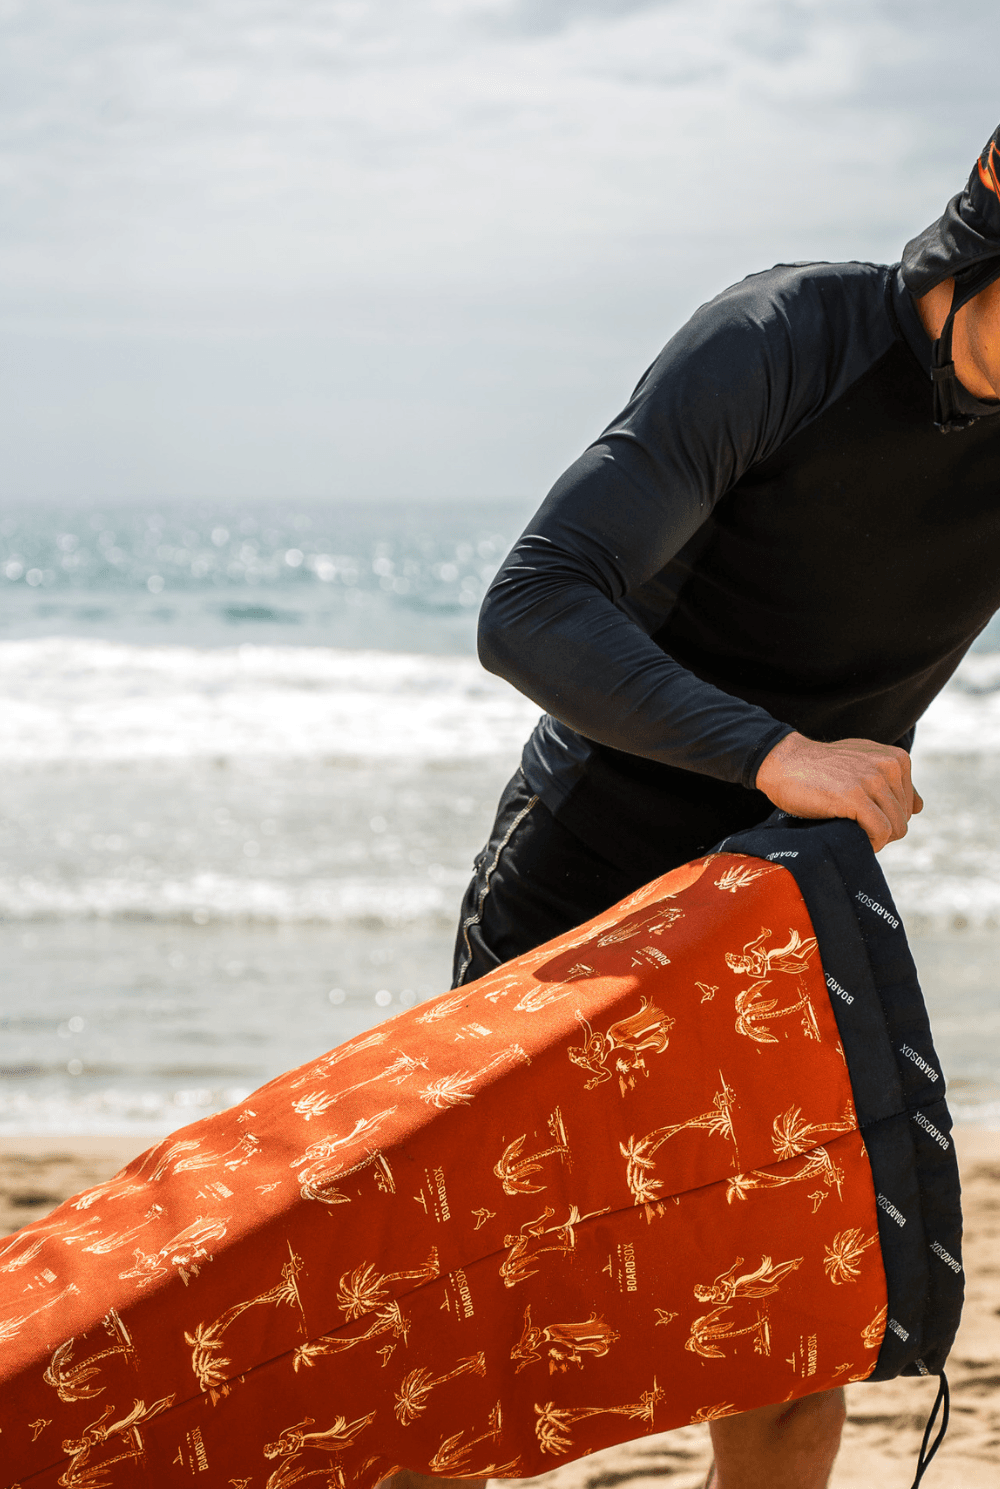 Hula Lula - Longboard Surf Board Cover